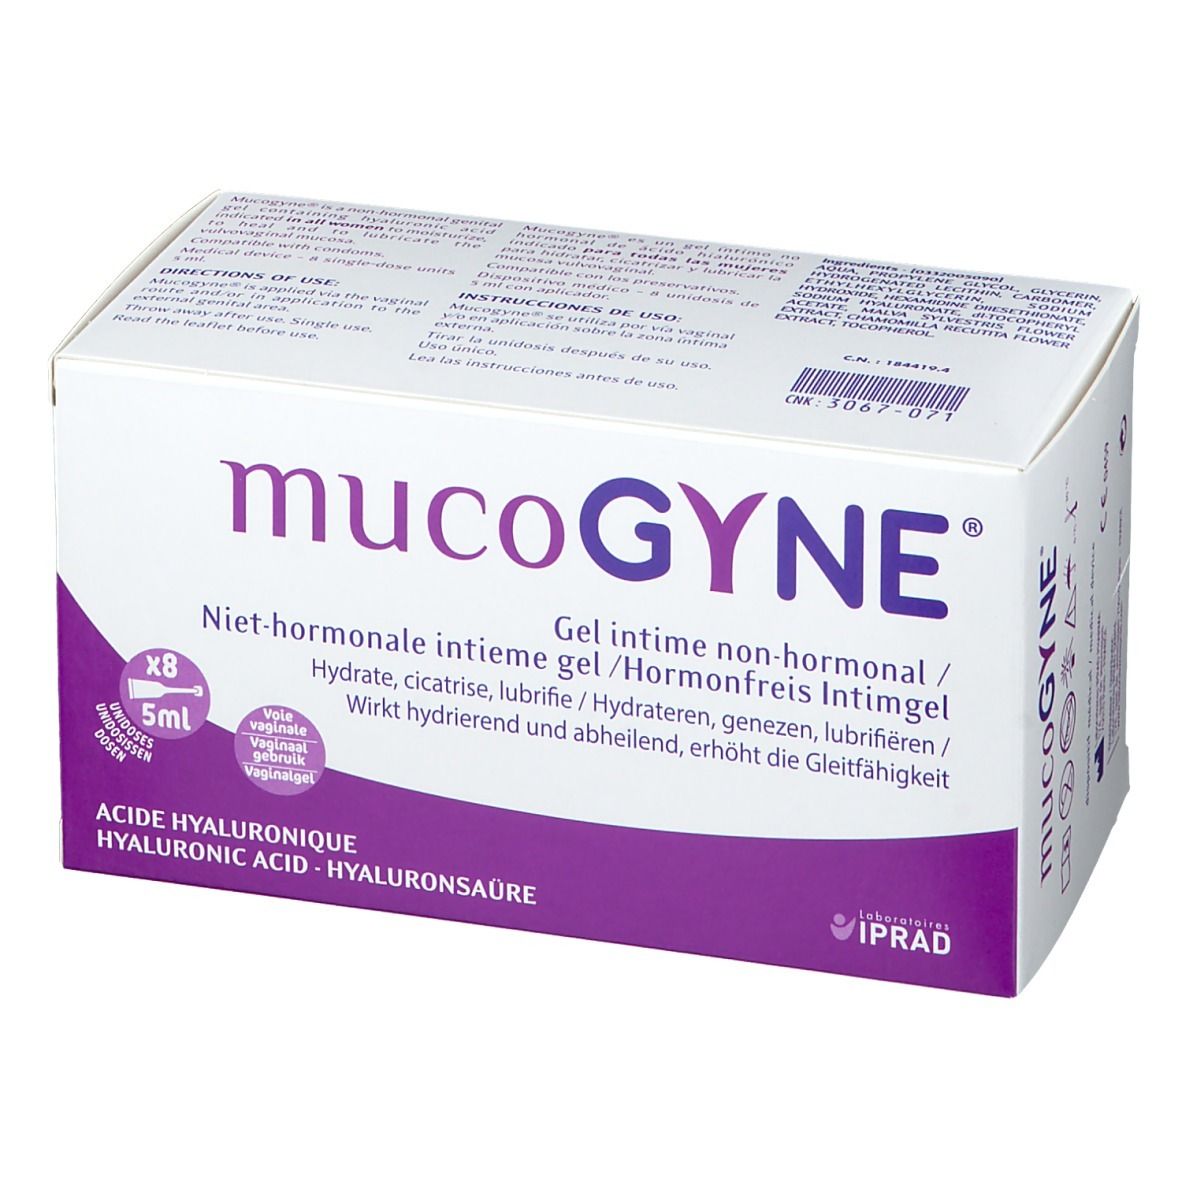 MucoGYNE® Gel intime non hormonal